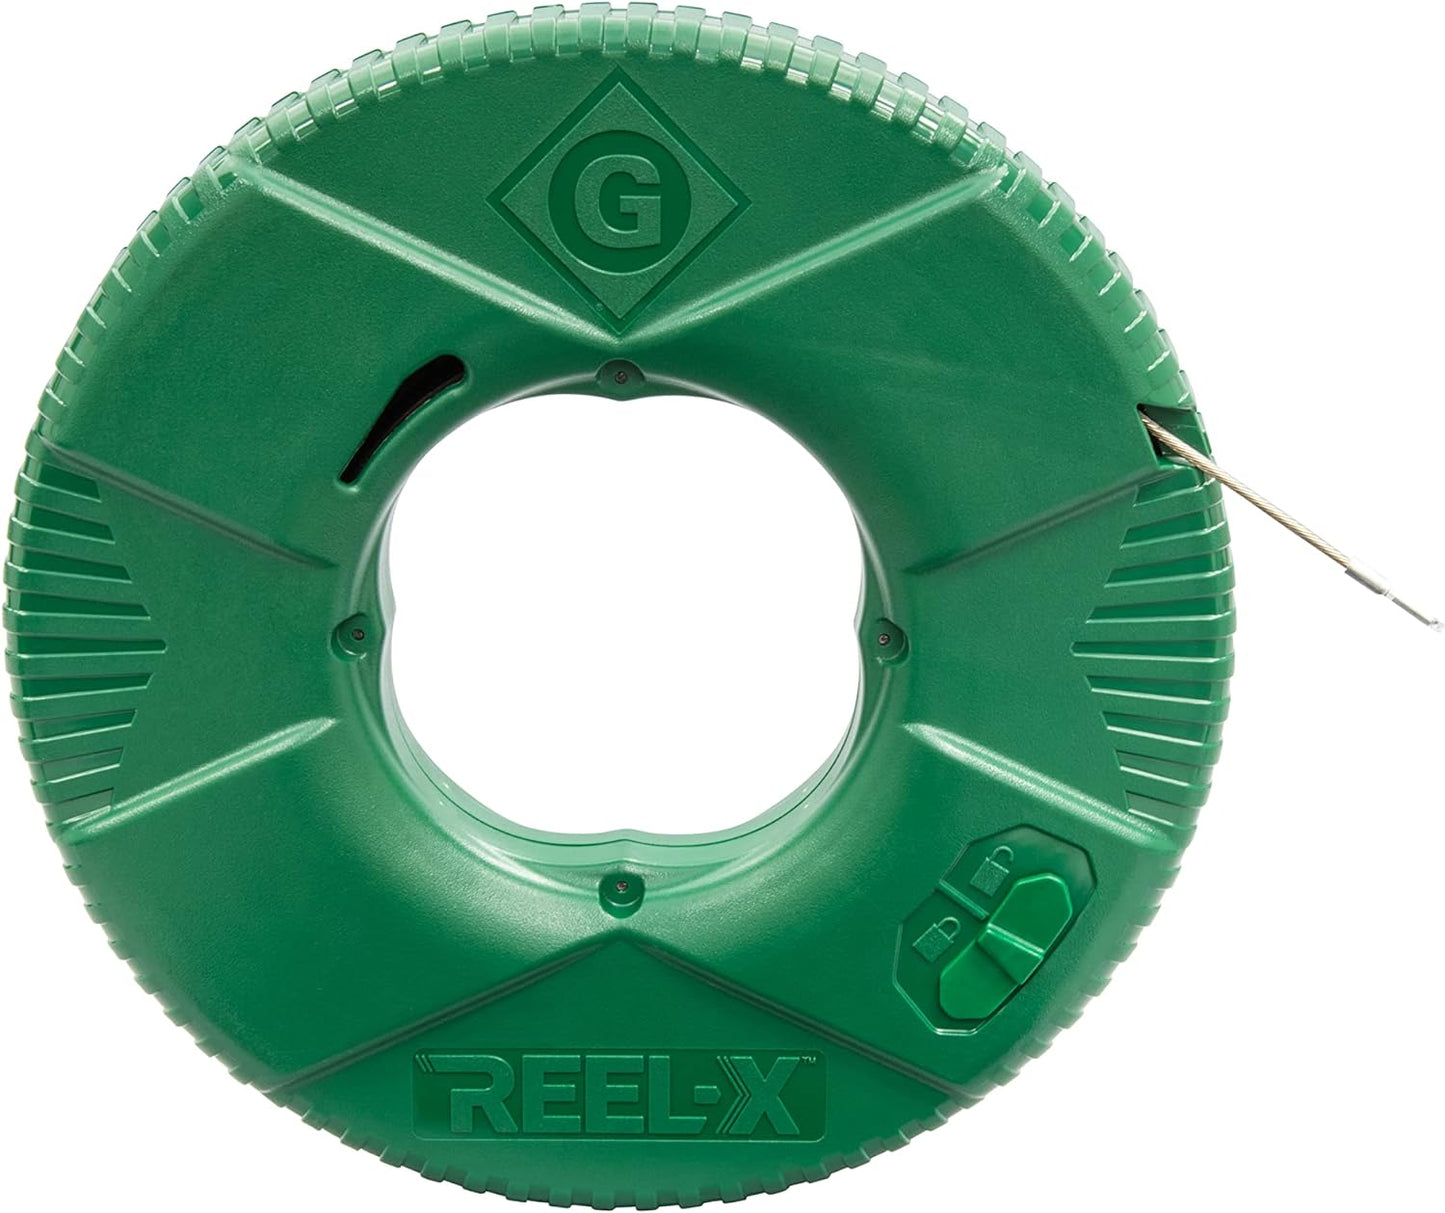 Greenlee FTXSS-240 X Stainless Steel Fishtape, 240', Green